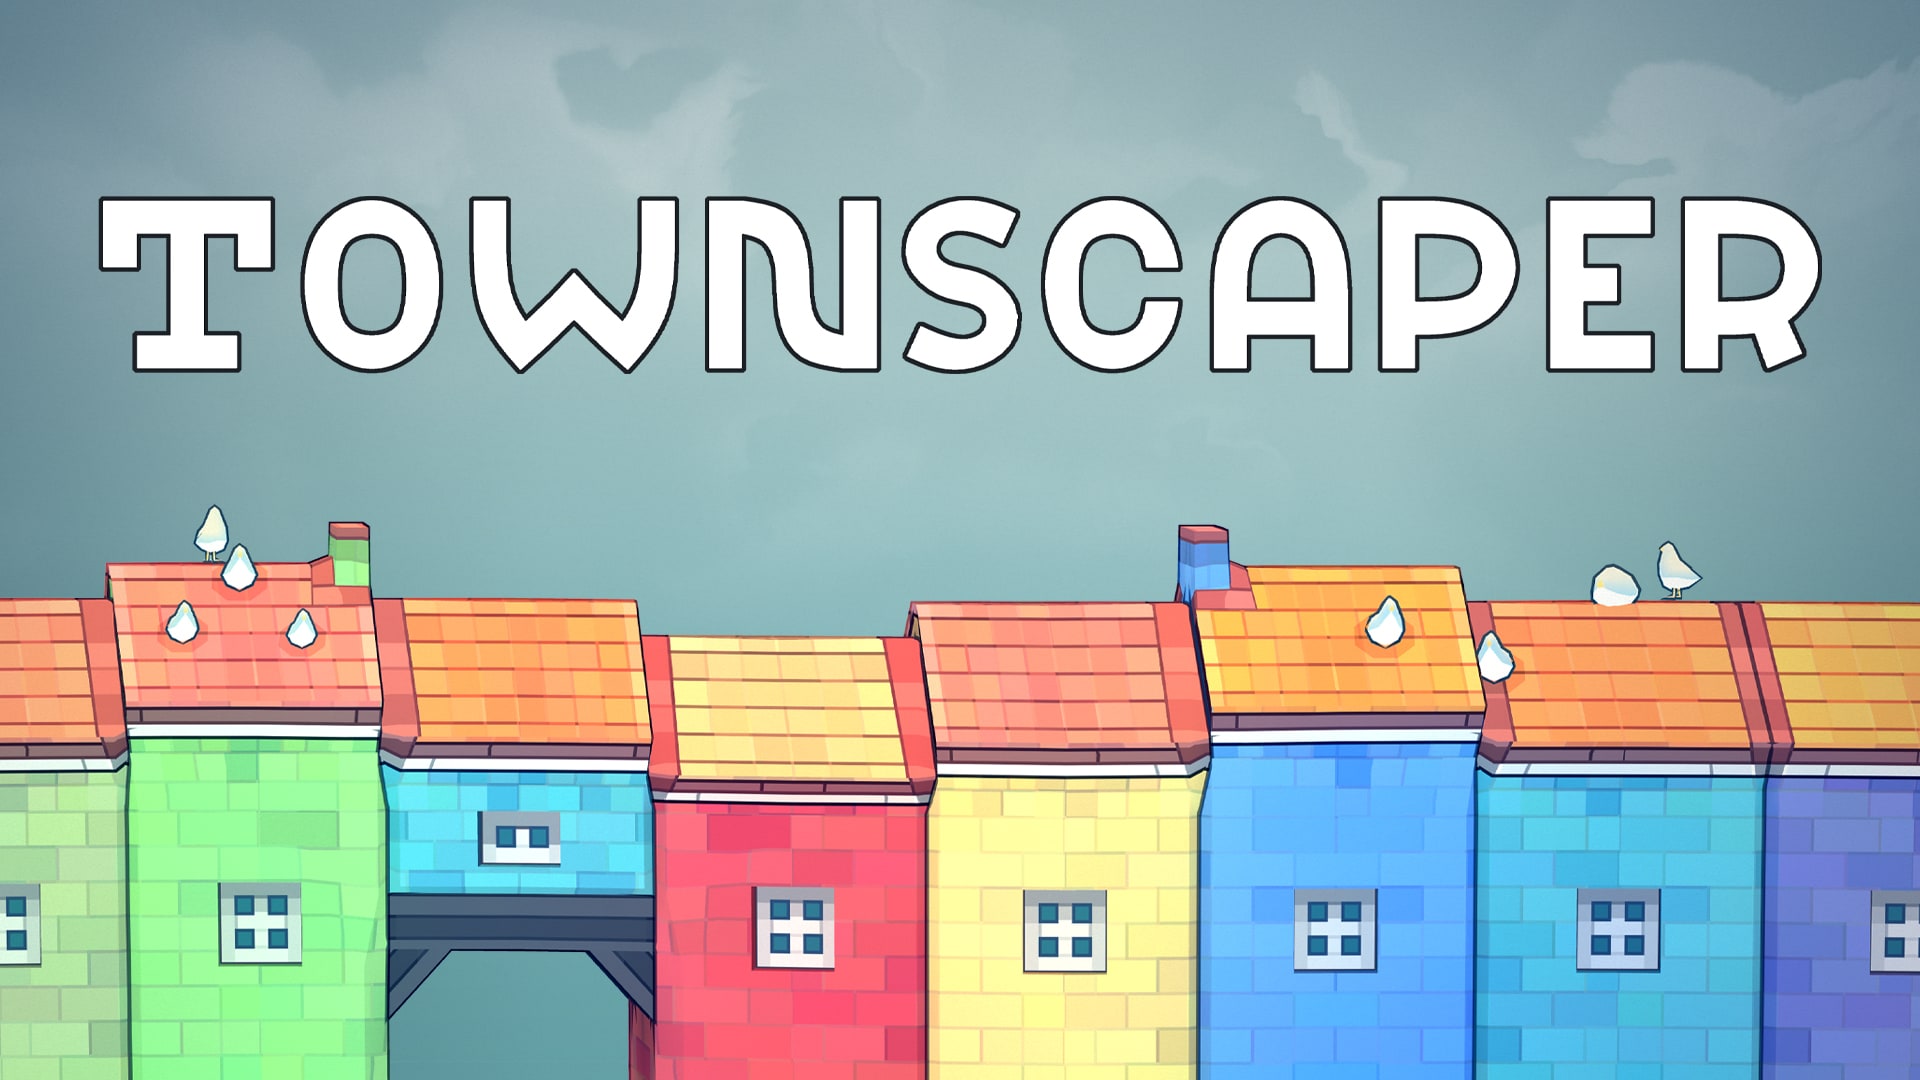 Townscaper 1